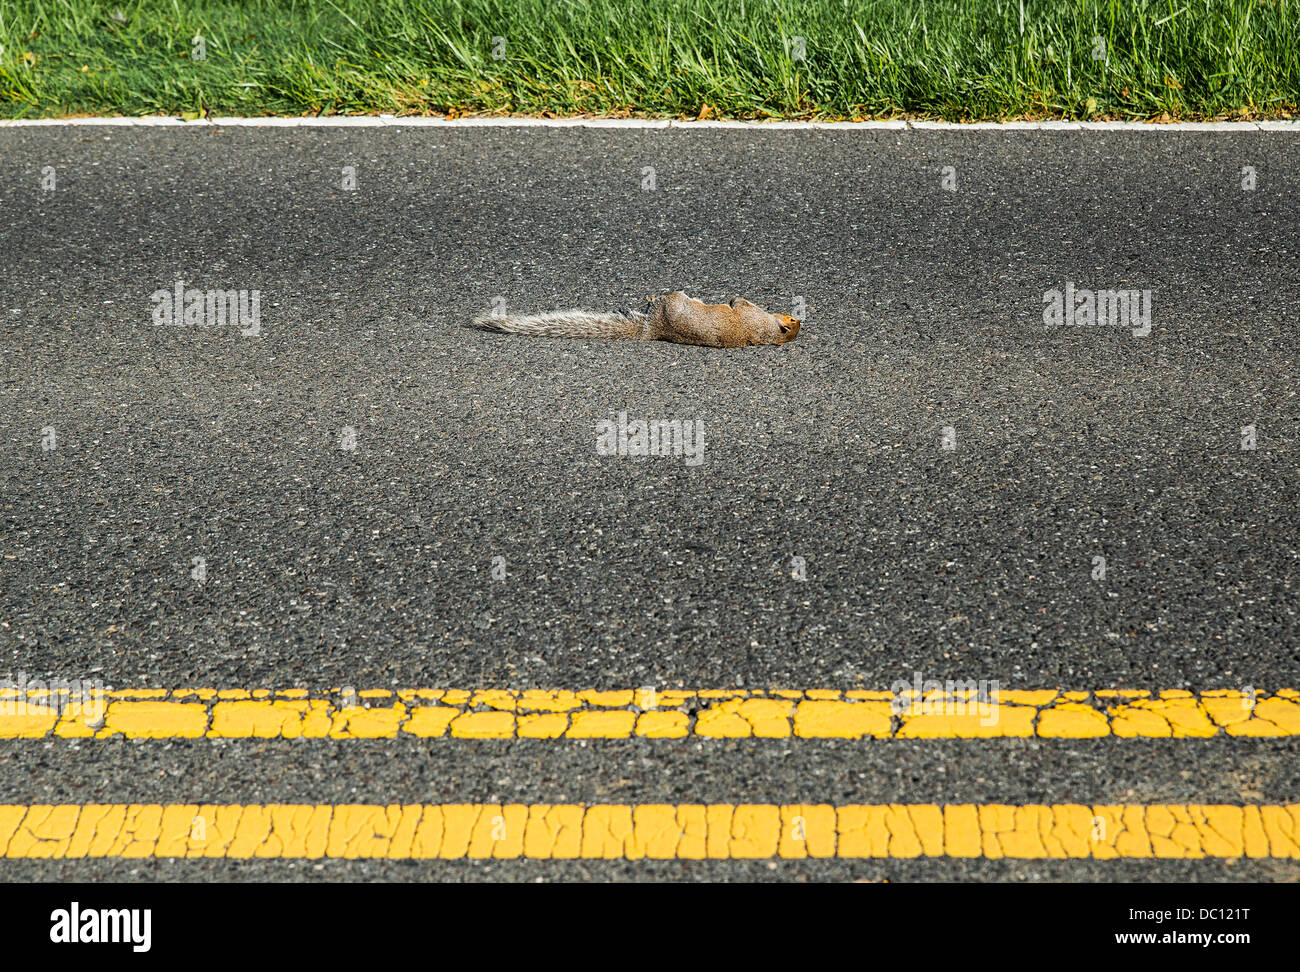 Roadkill squirrel in road. Stock Photo